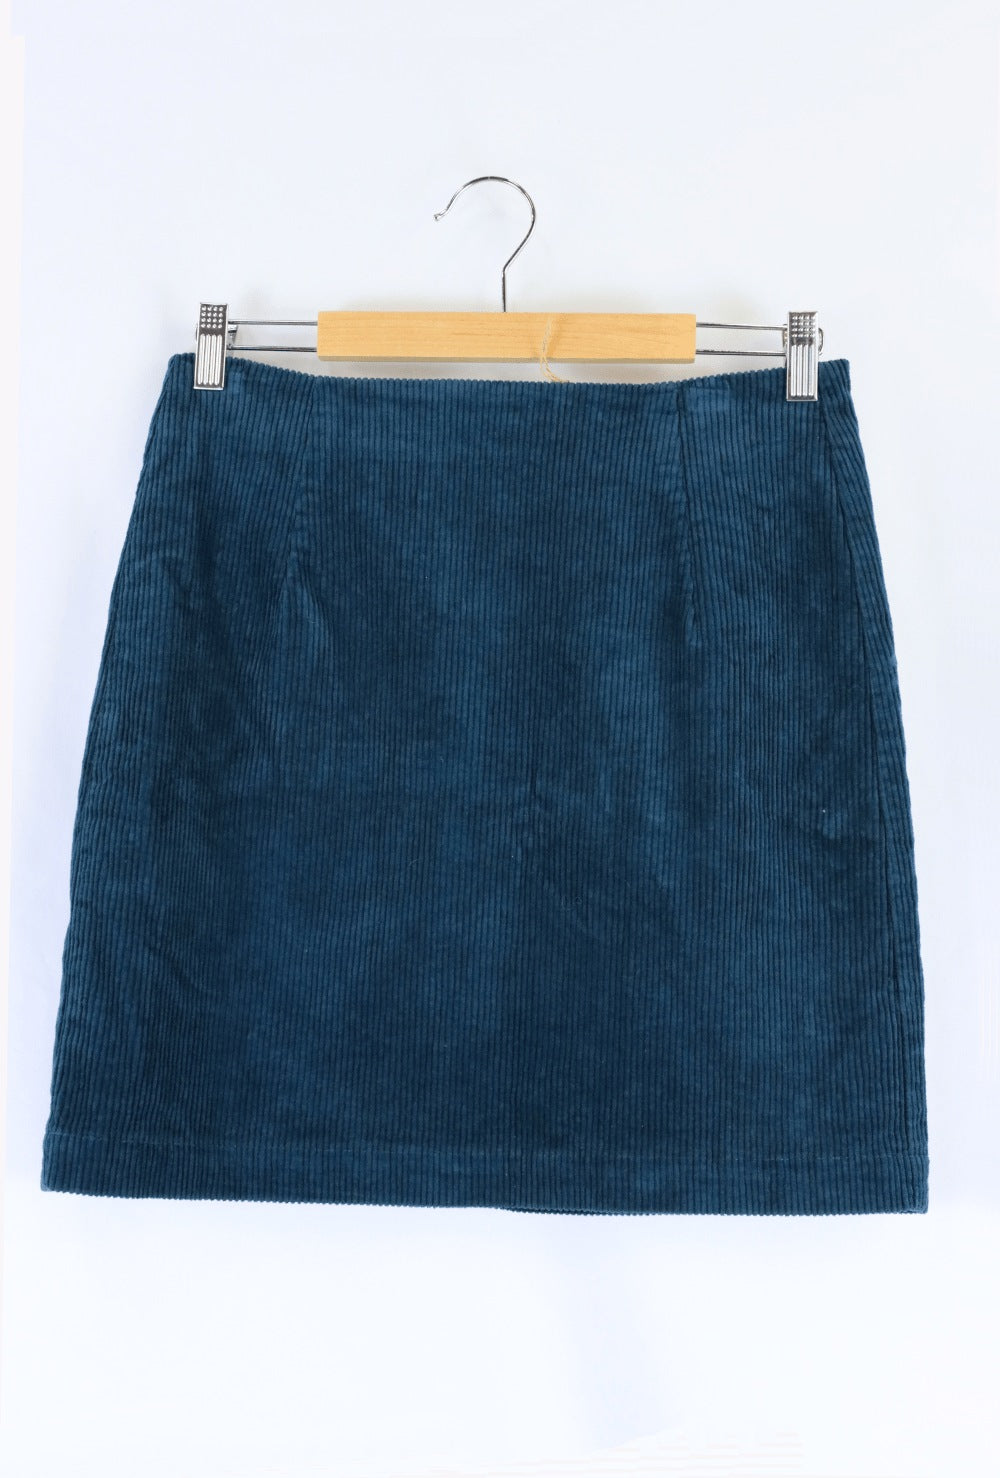 Gorman Corduroy Skirt Blue 10